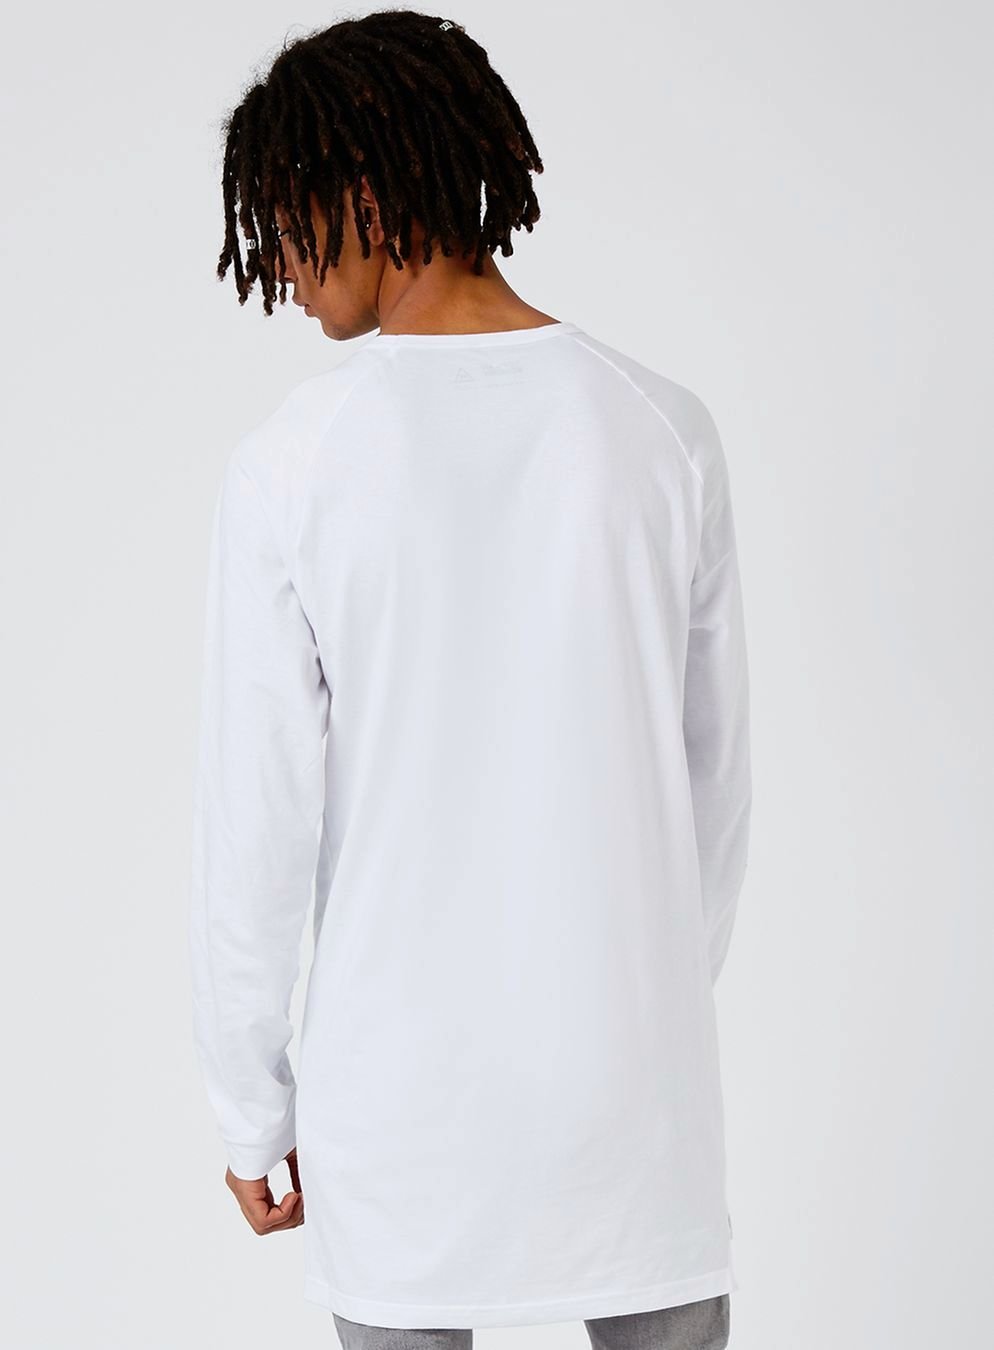 Longline LS White T-Shirt Size: M